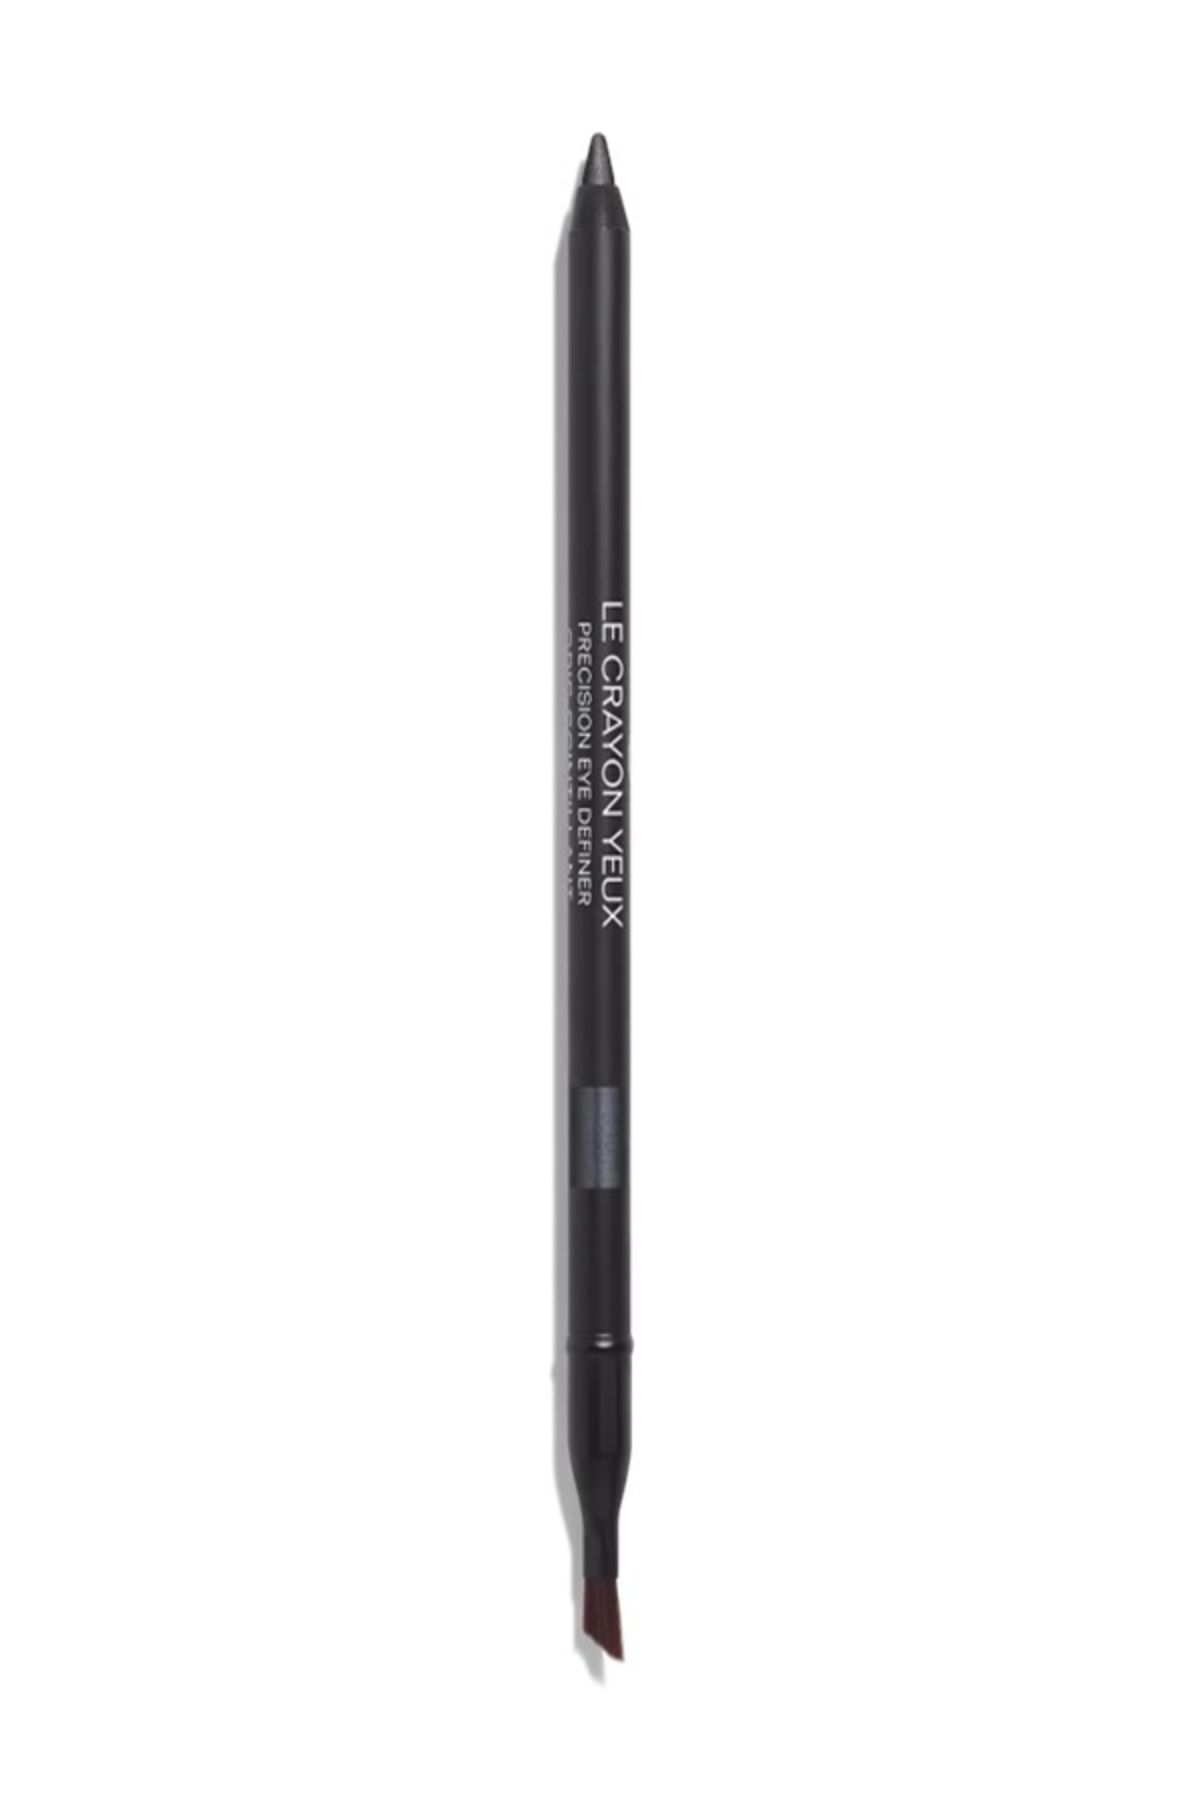 Chanel LE CRAYON YEUX-Ultra Uzun Süre Kalıcı Göz Kalemi